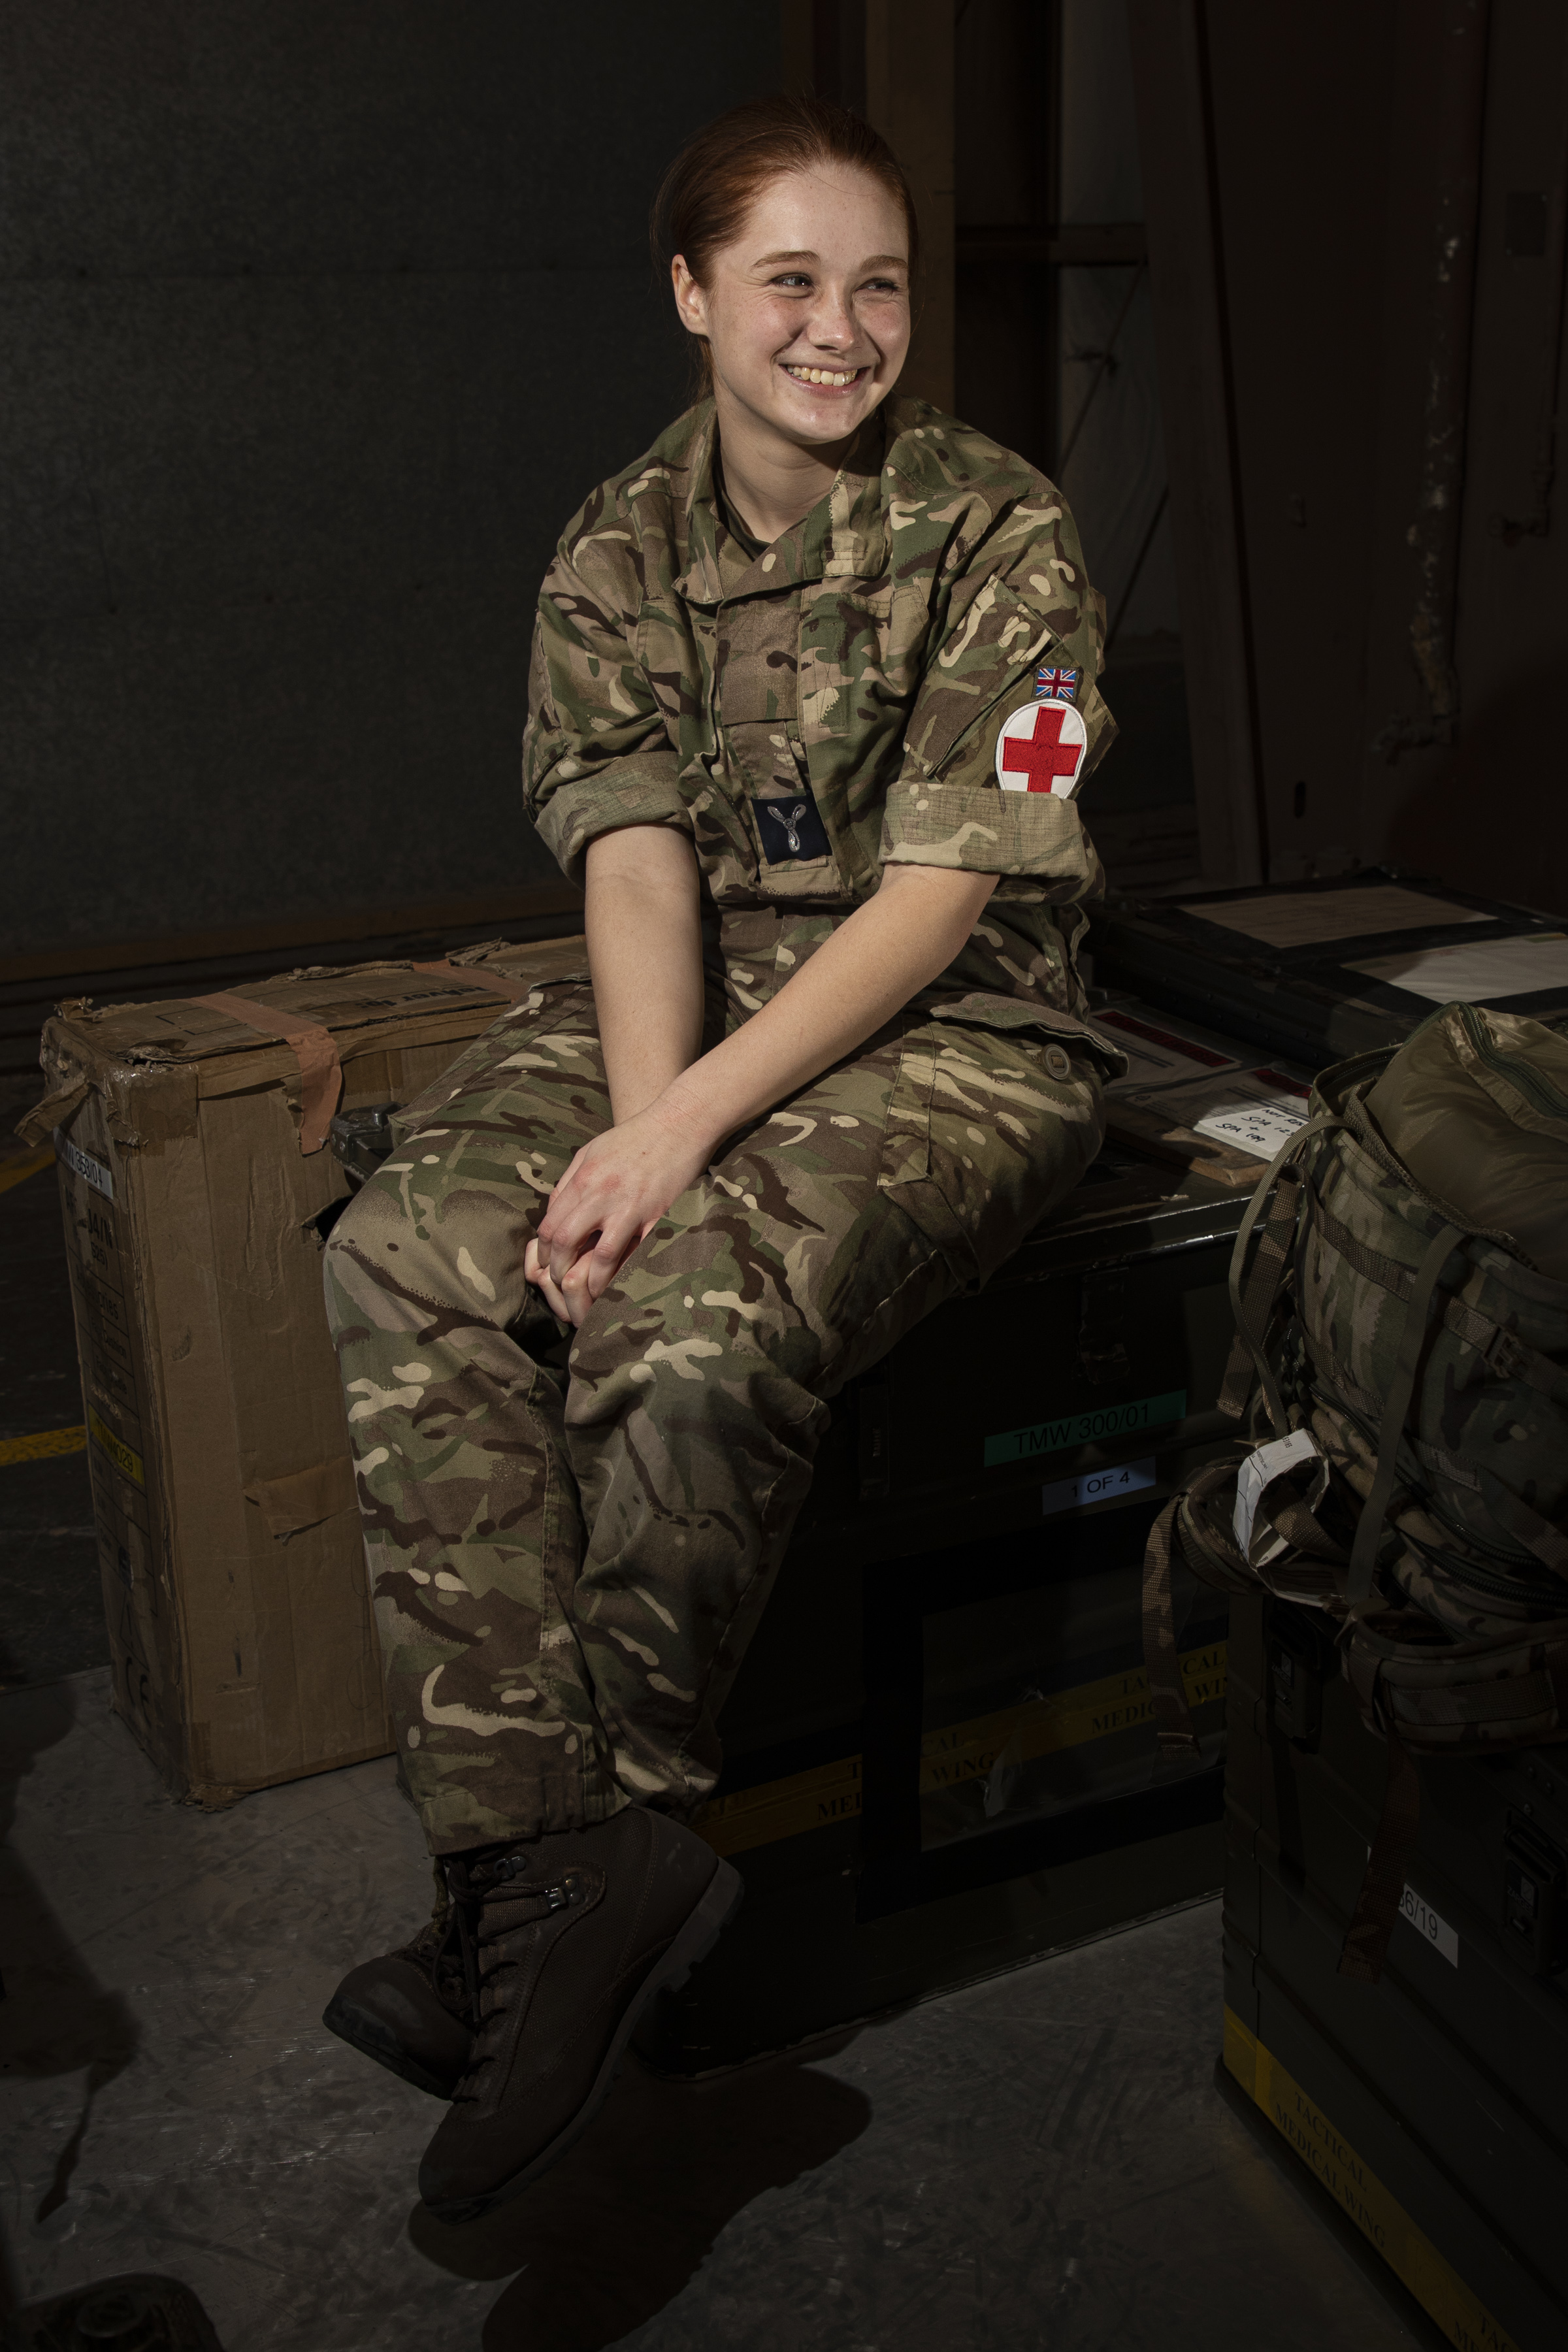 RAF medic sat on crates